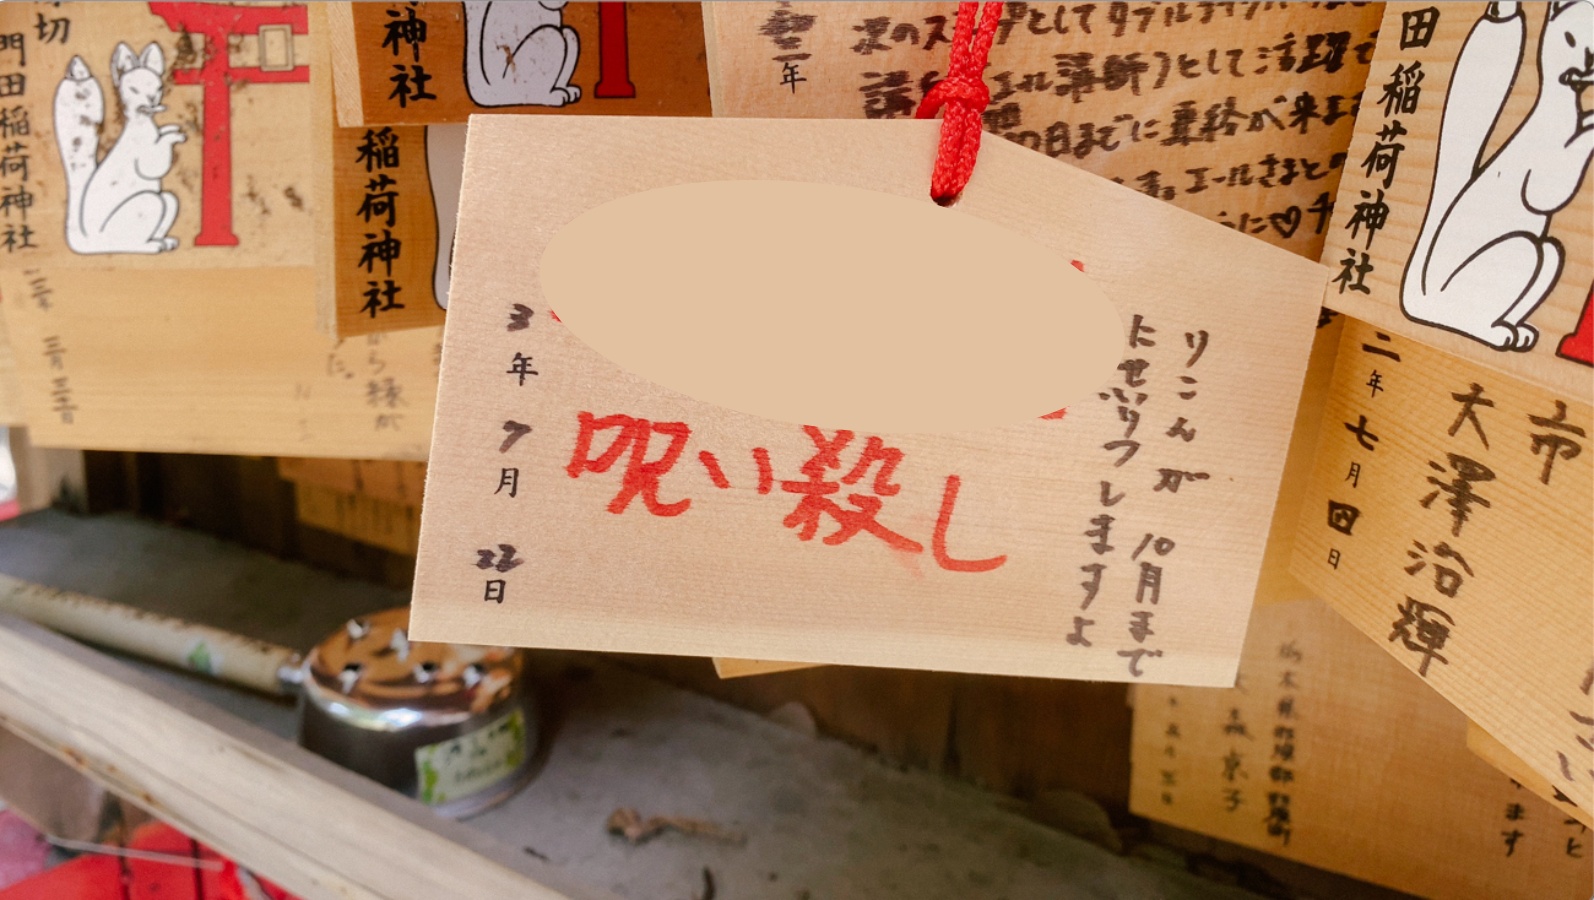 Votive plaque at Kadota Inari